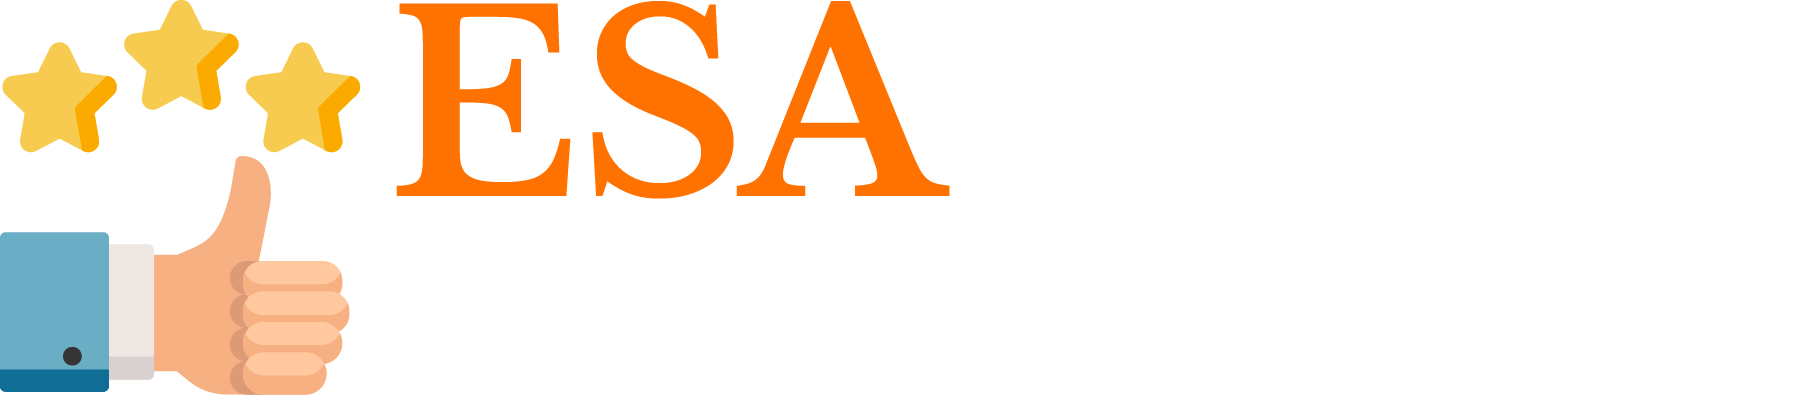 ESA Letter Review